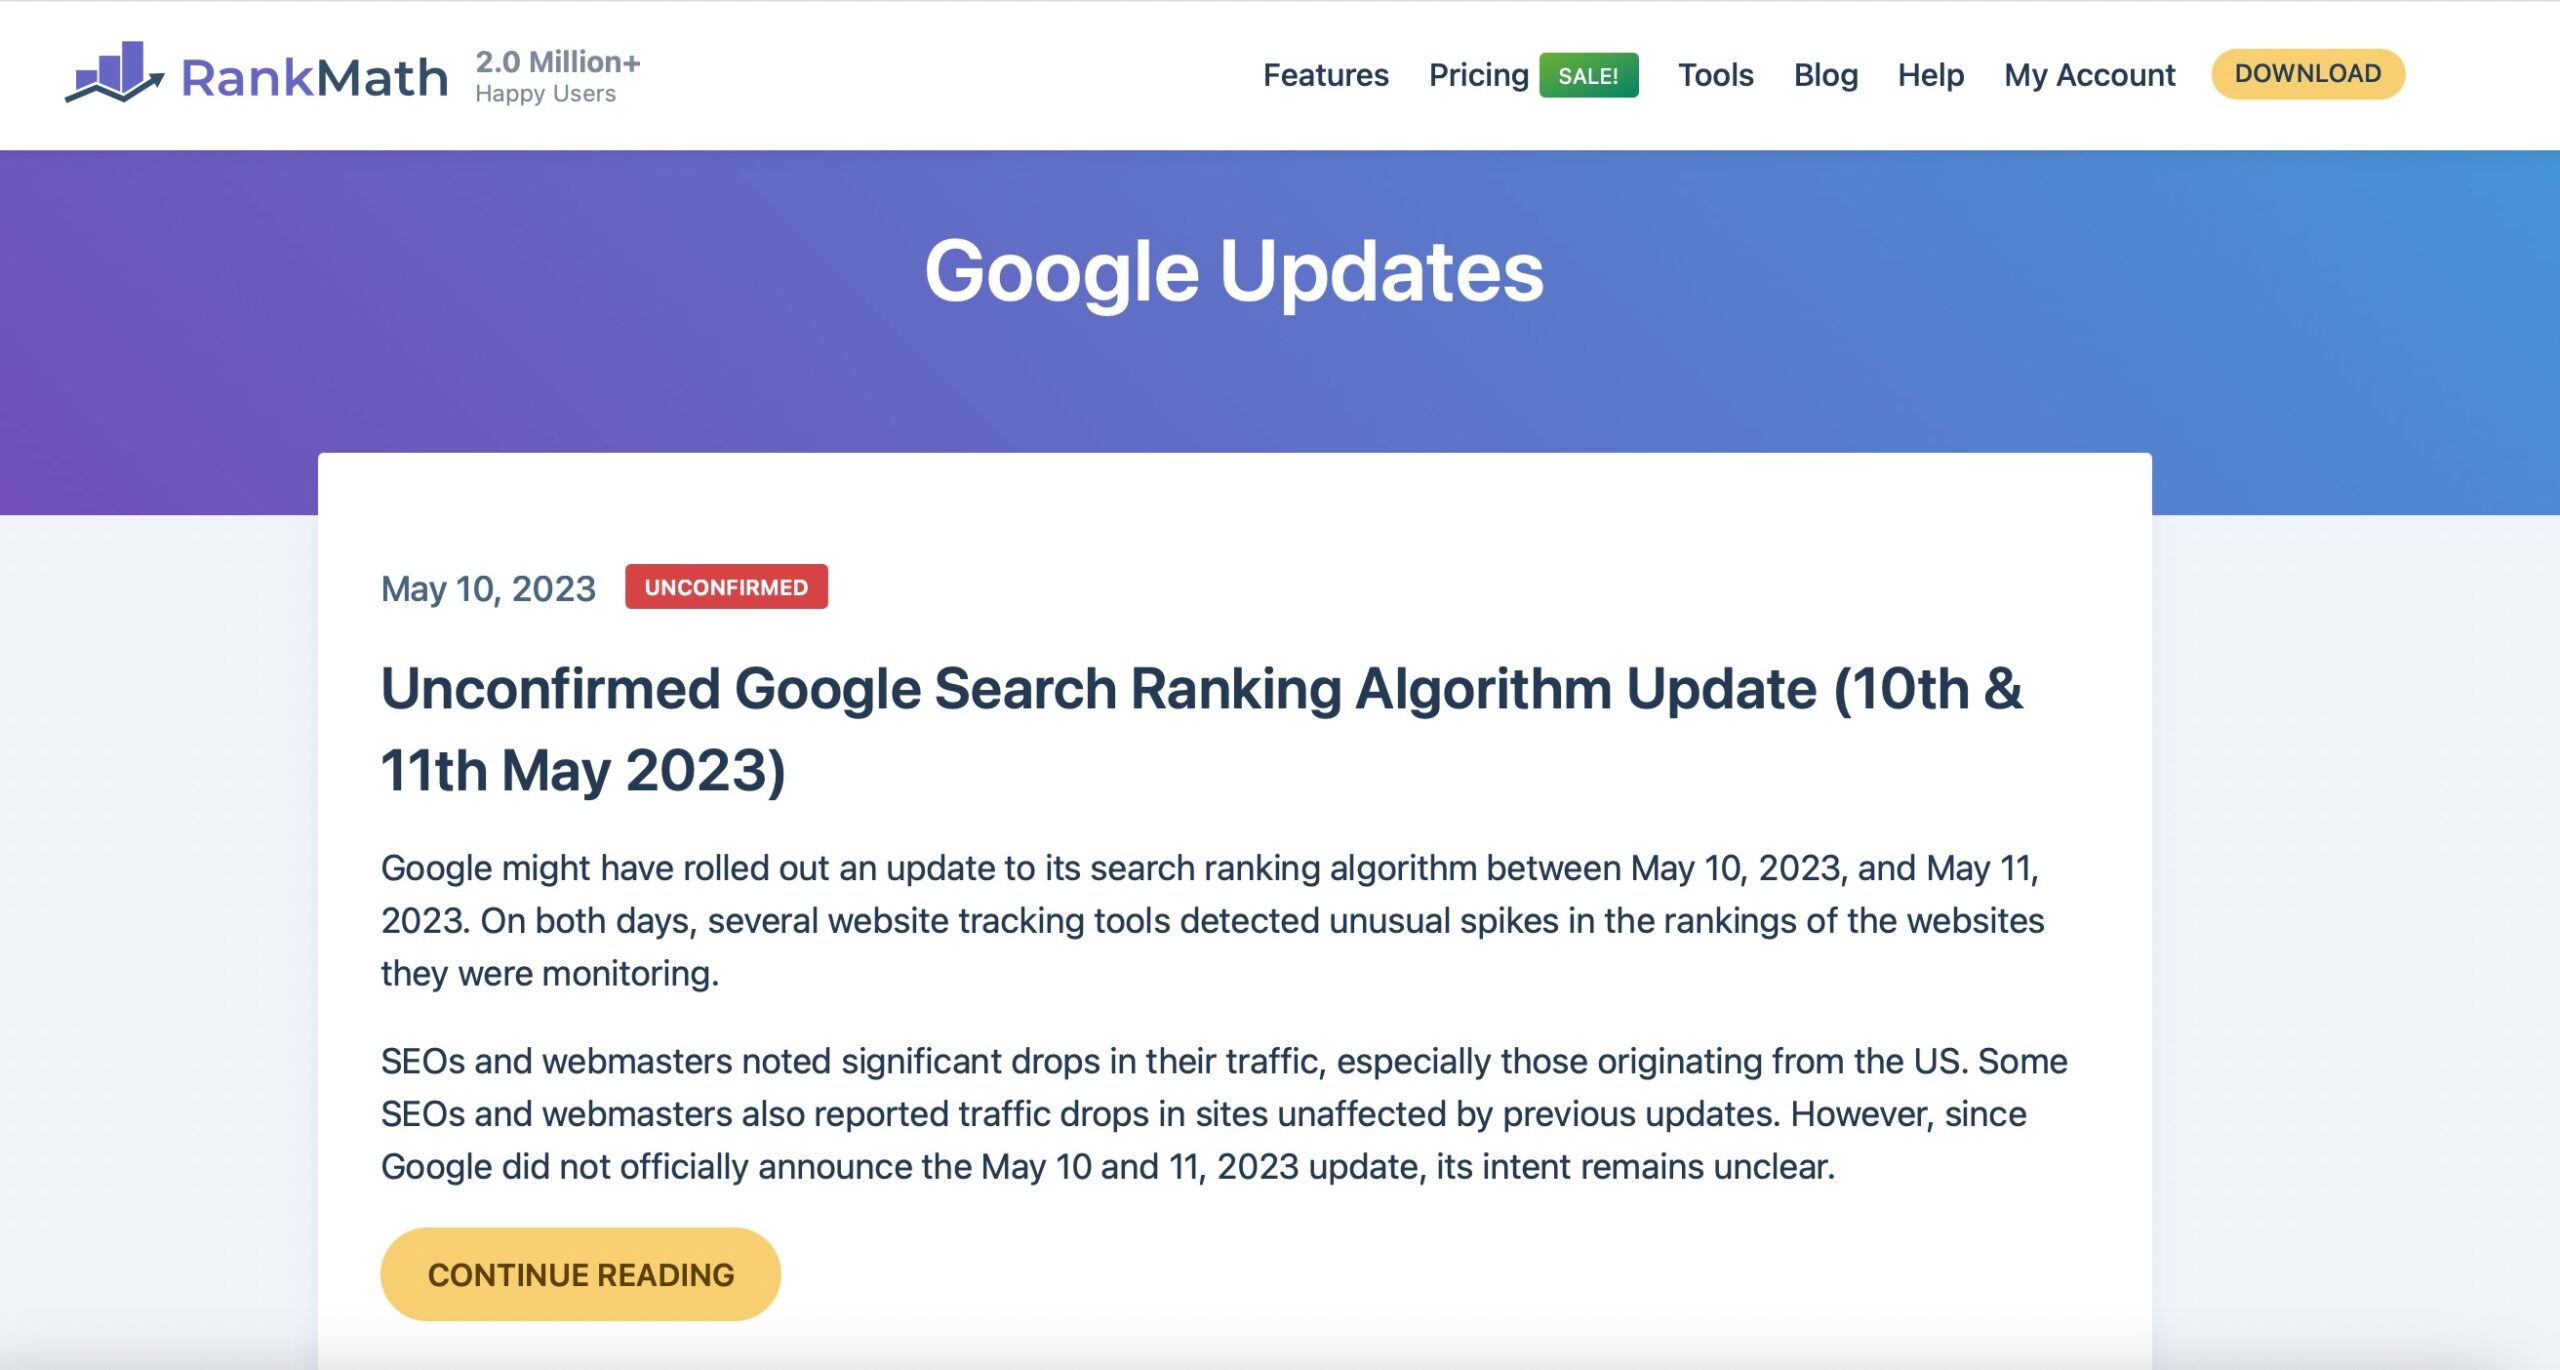 Rank Math's Google Update page